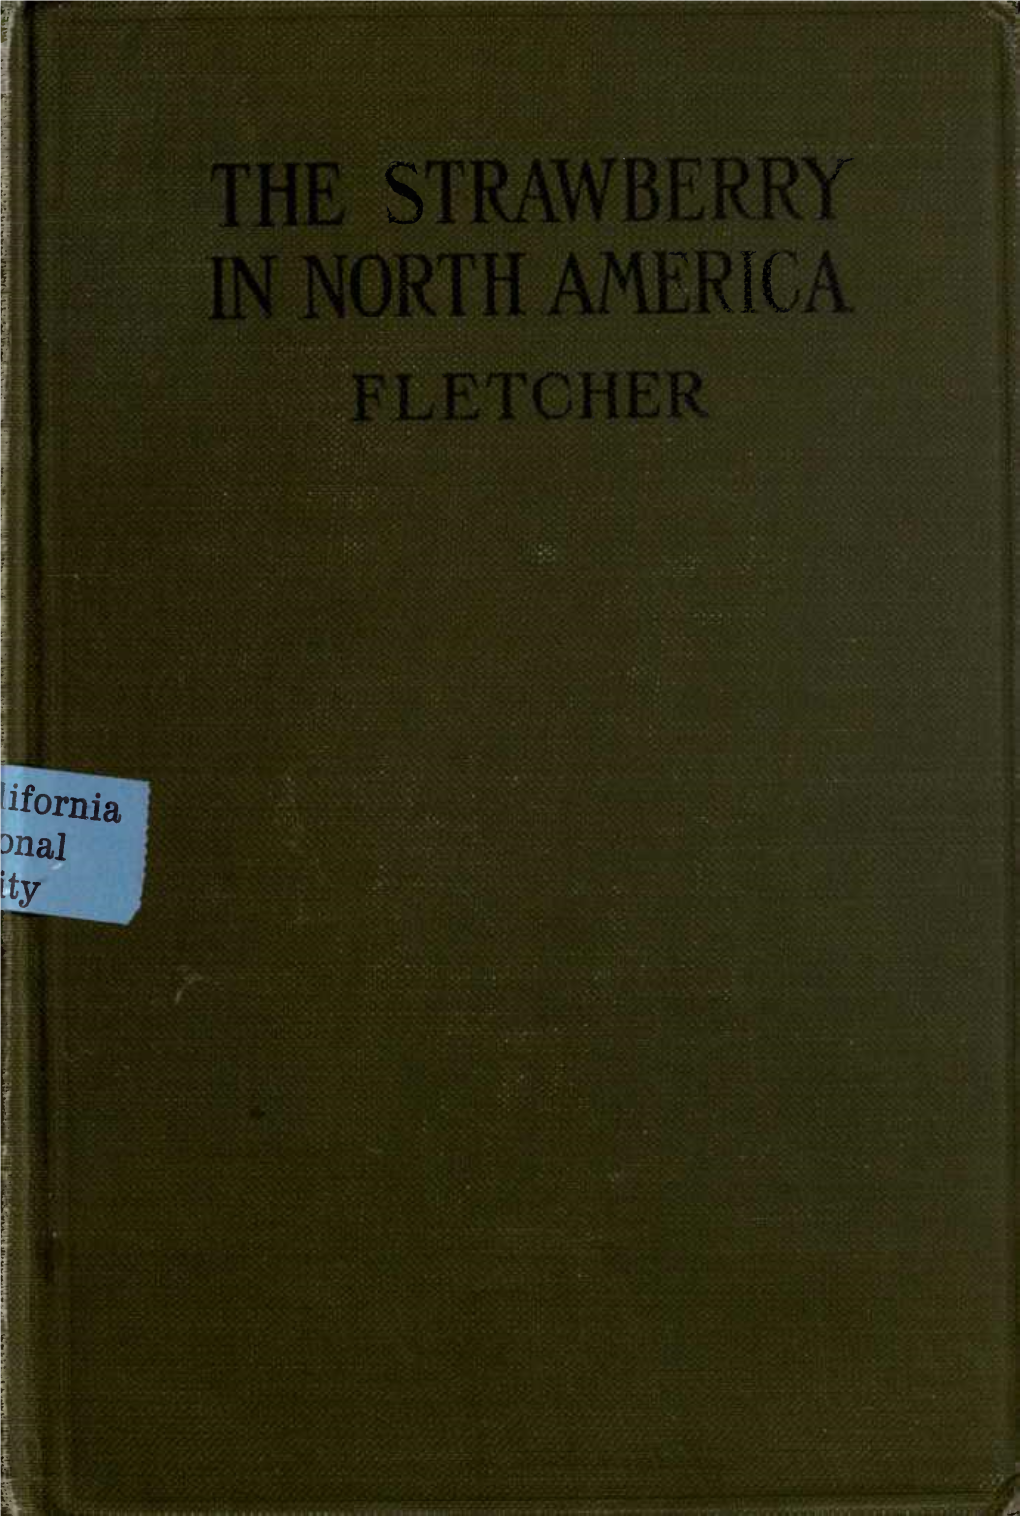 In North America Fletcher University of California at Los Angeles